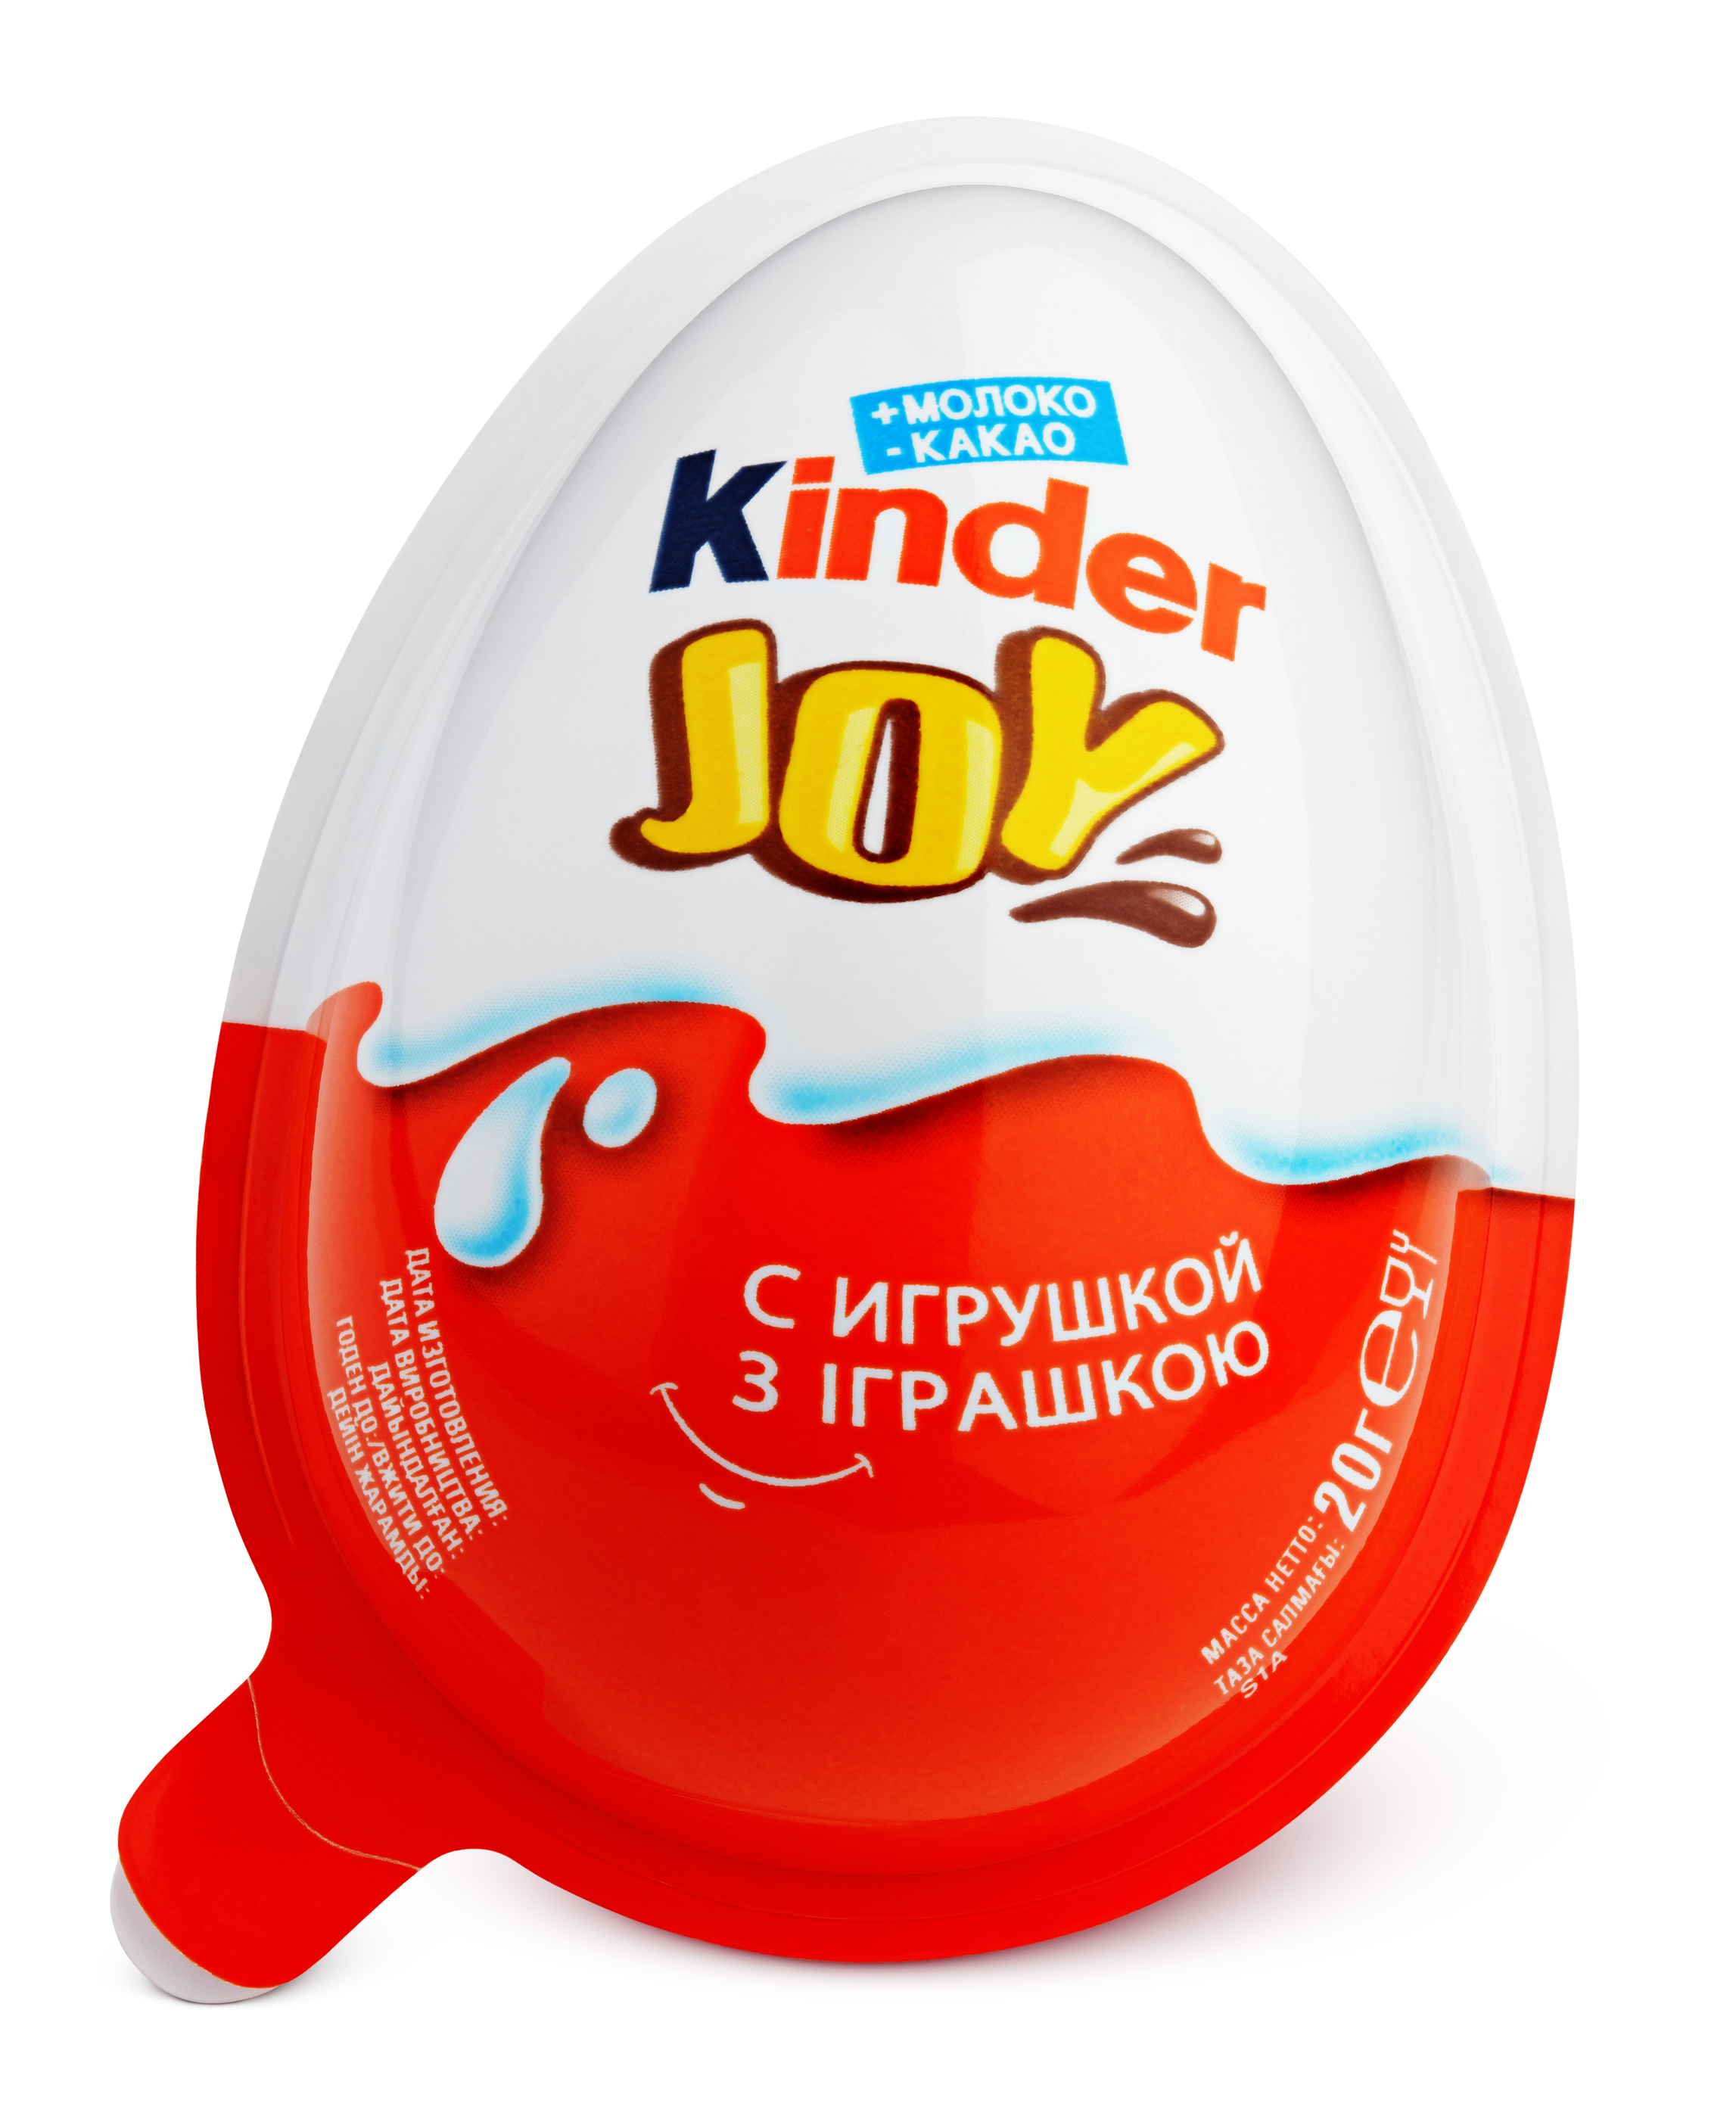 kinder surprise eggs illegal